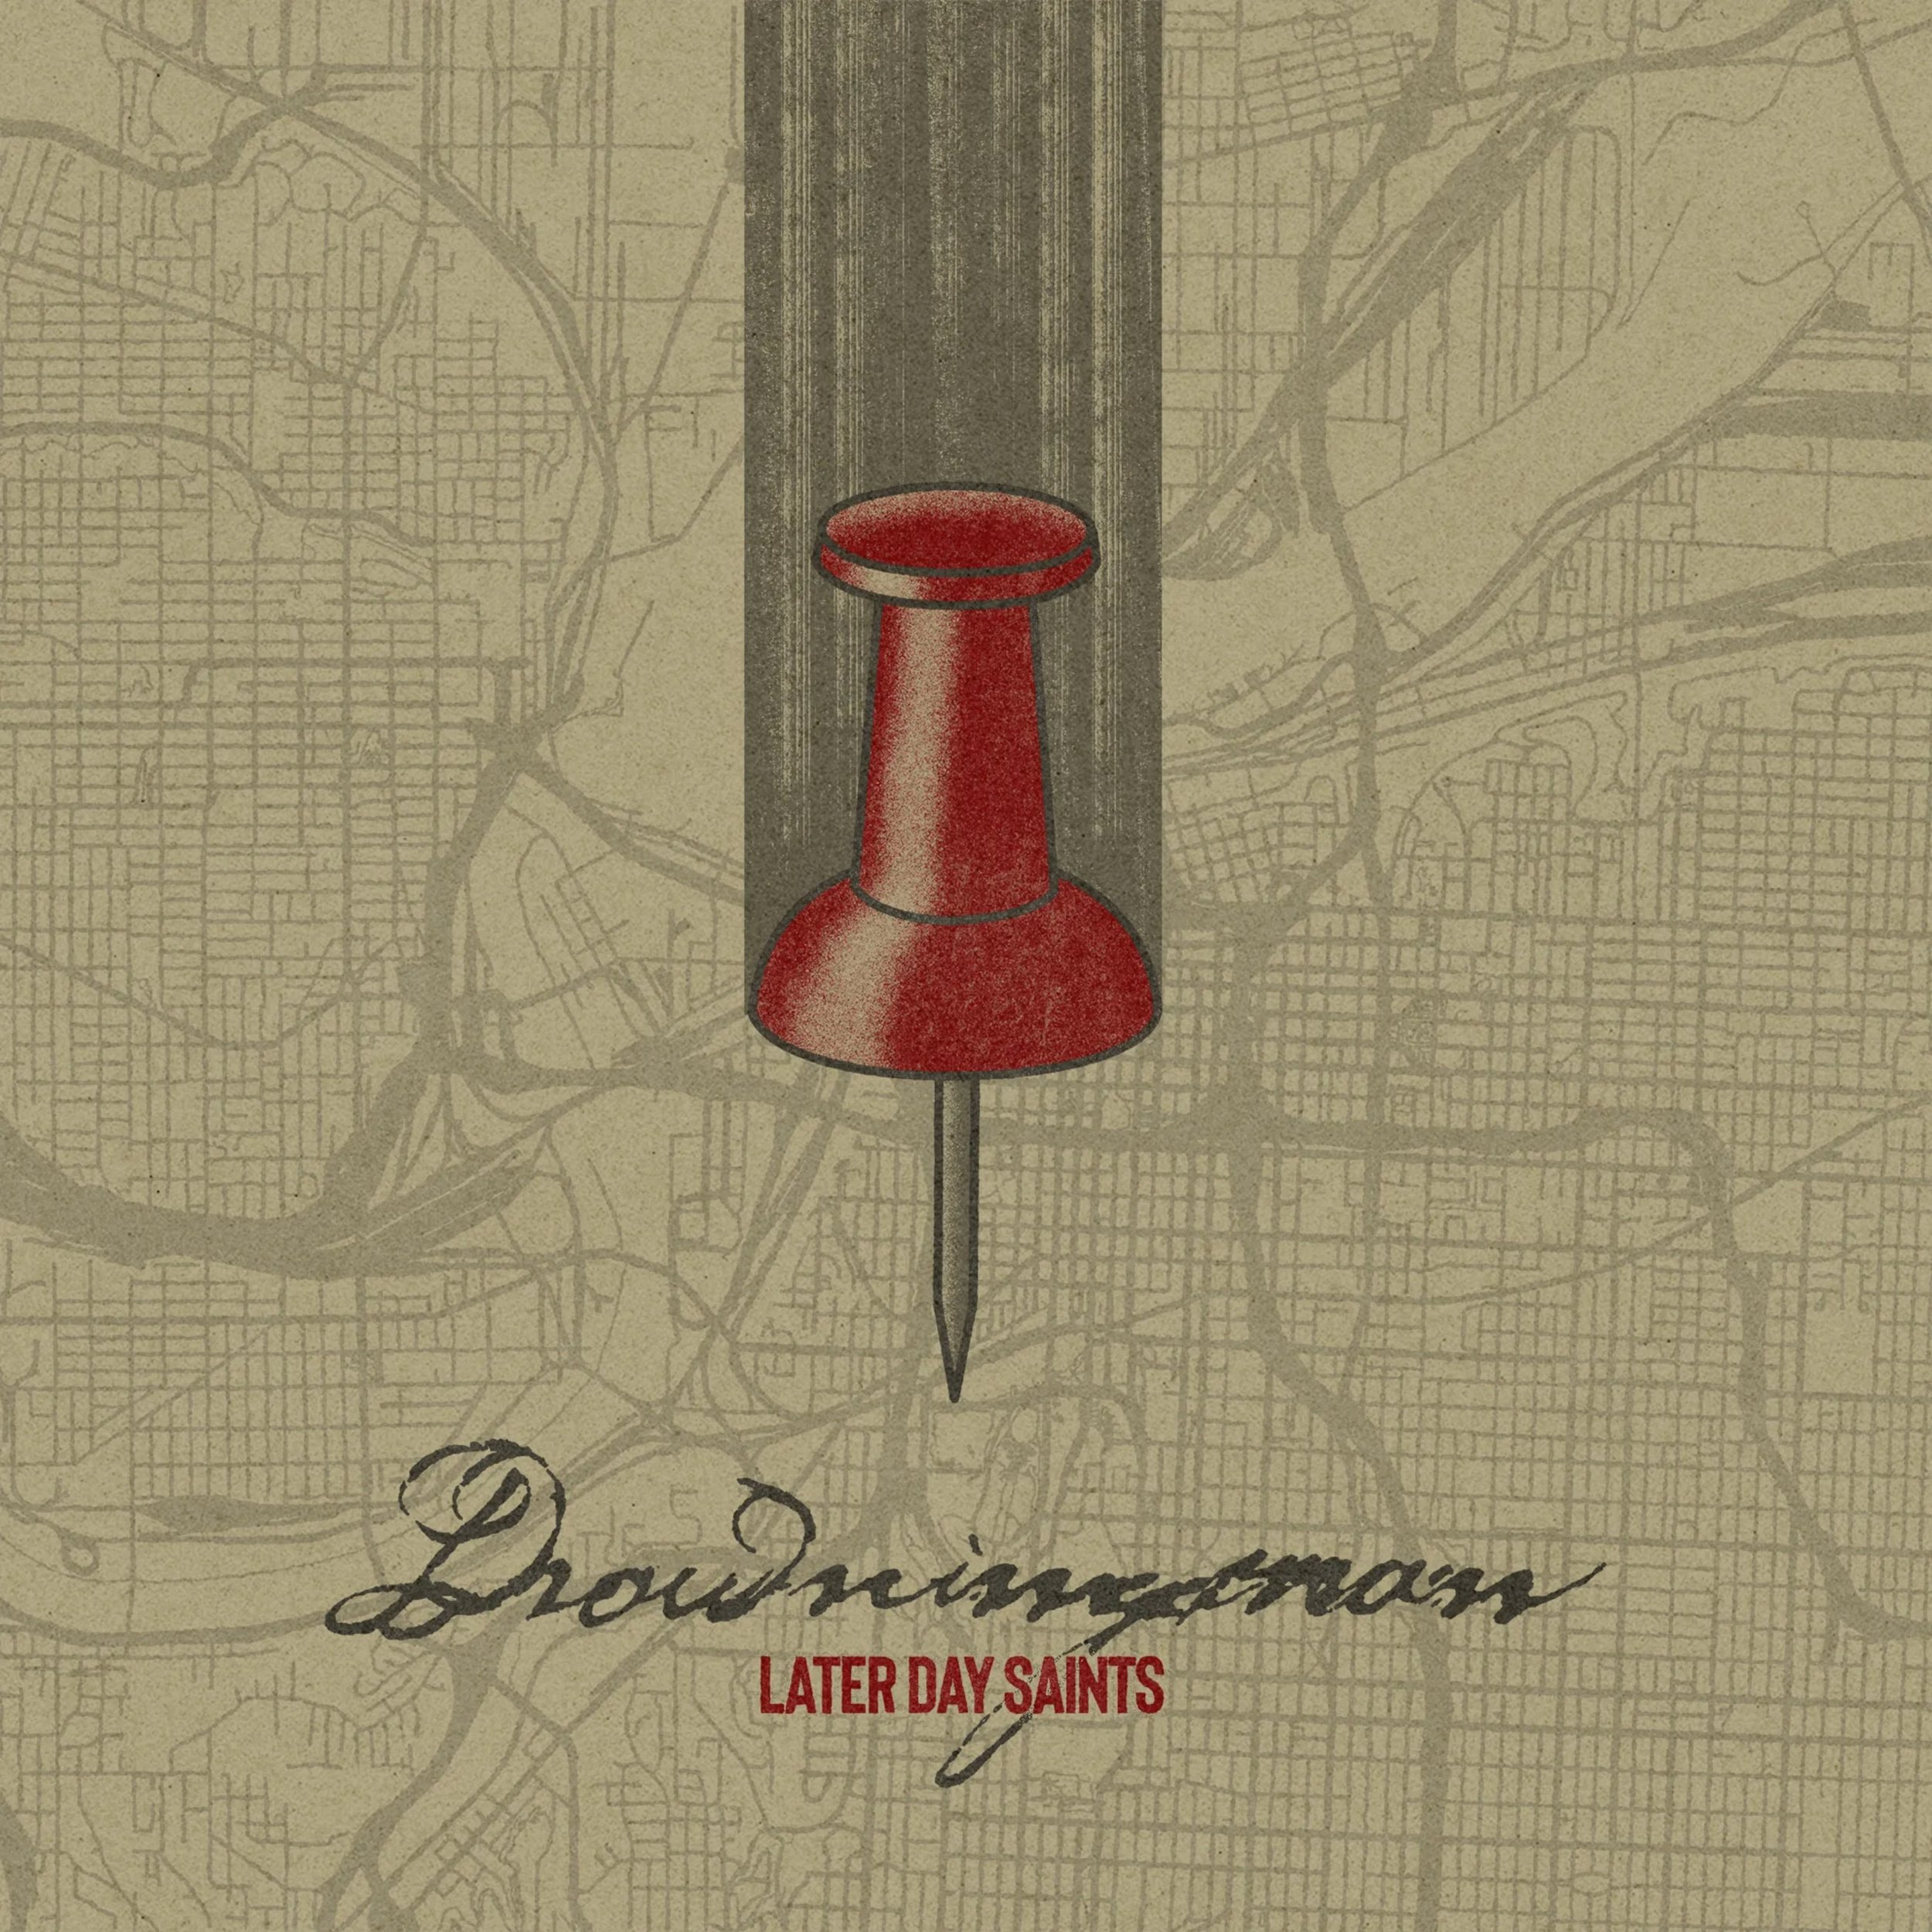 Drowningman - Later Day Saints - Cover.jpg